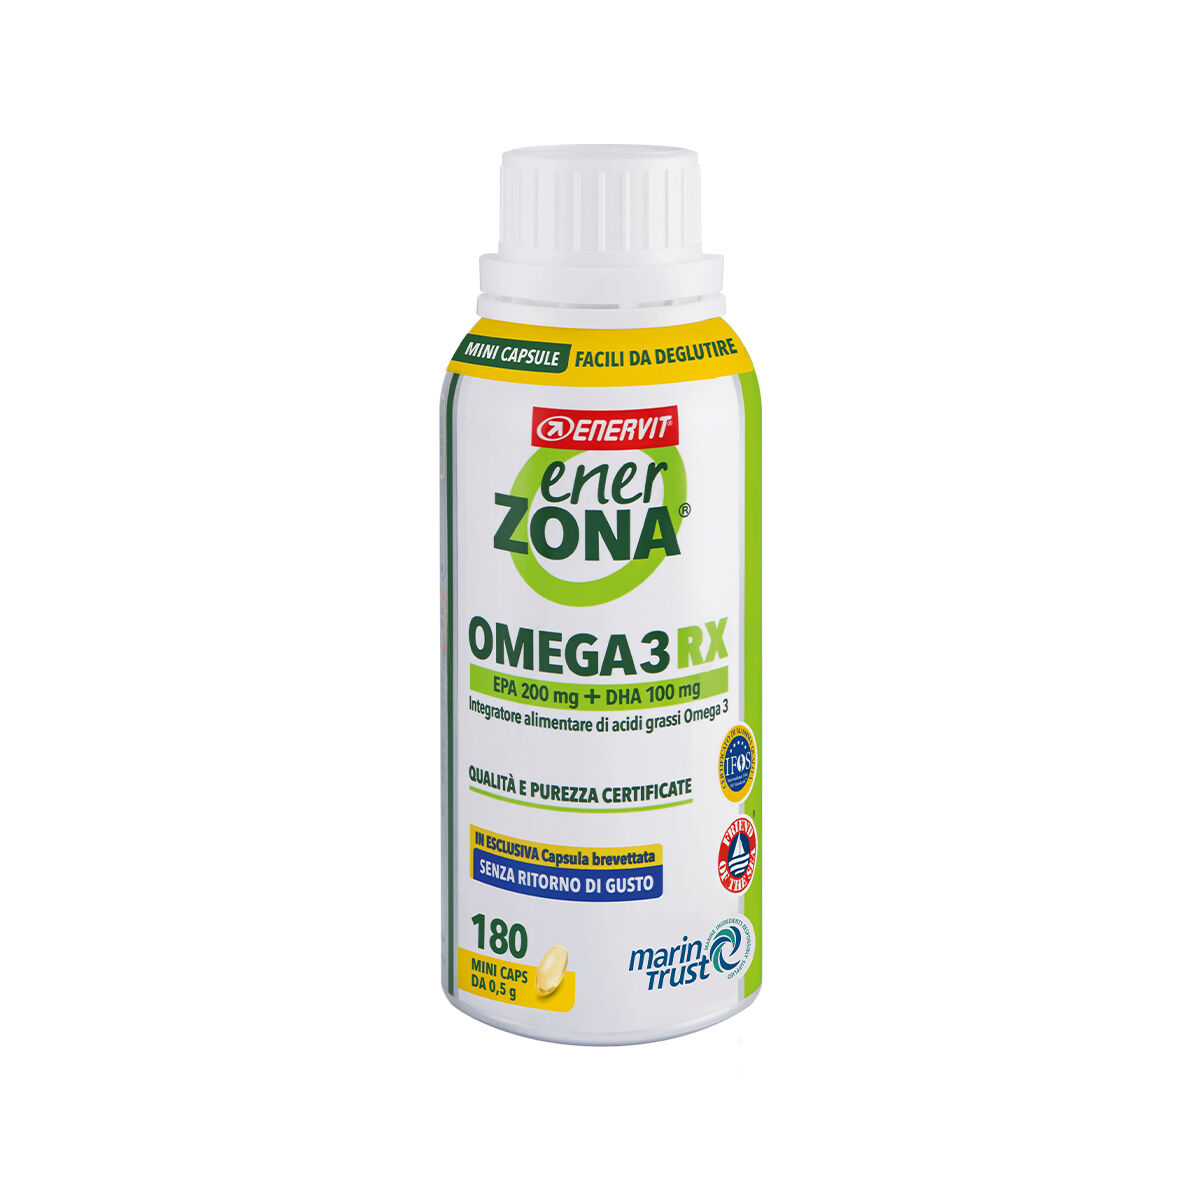 enervit enerzona omega 3 rx integratore 180 capsule